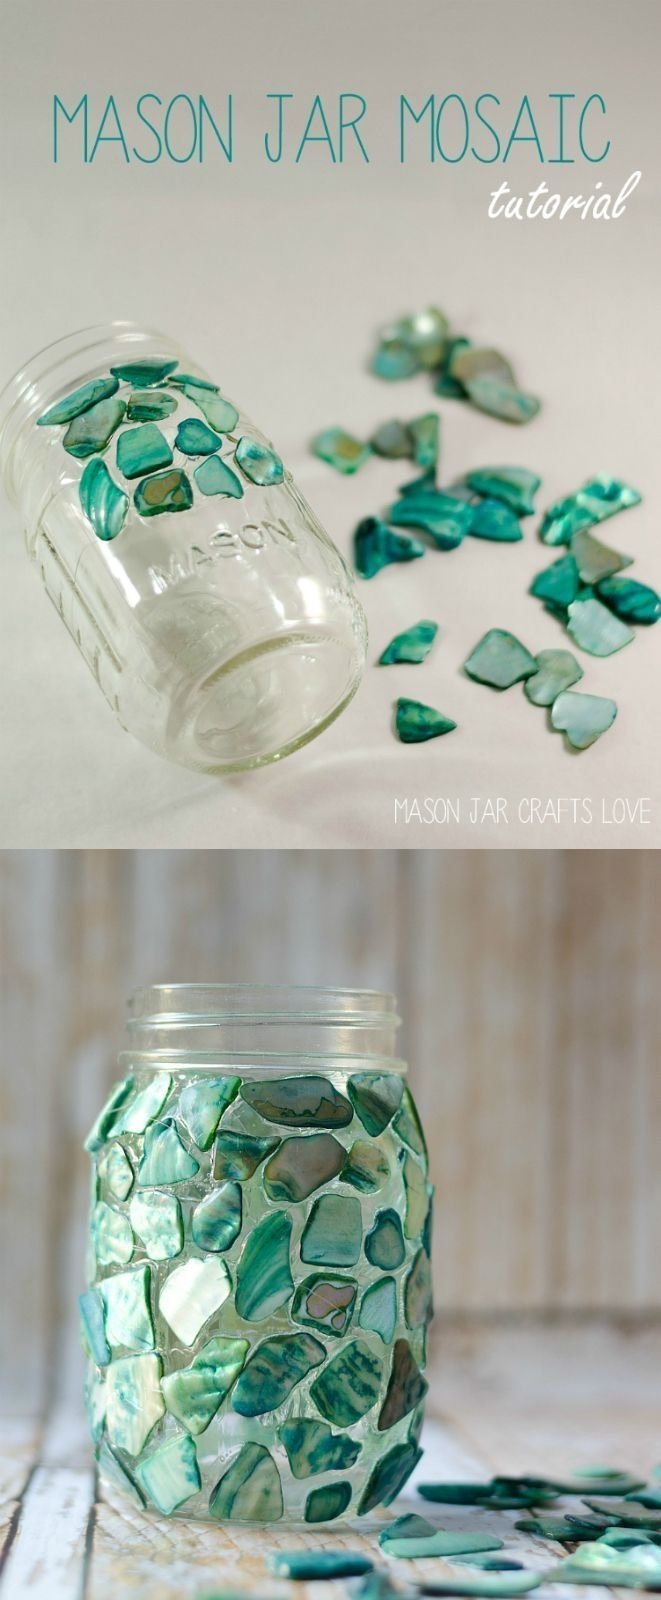 10 Great Craft Ideas For Mason Jars diy crafts mason jar craft ideas mason jar mosaic mosaic craft 1 2024